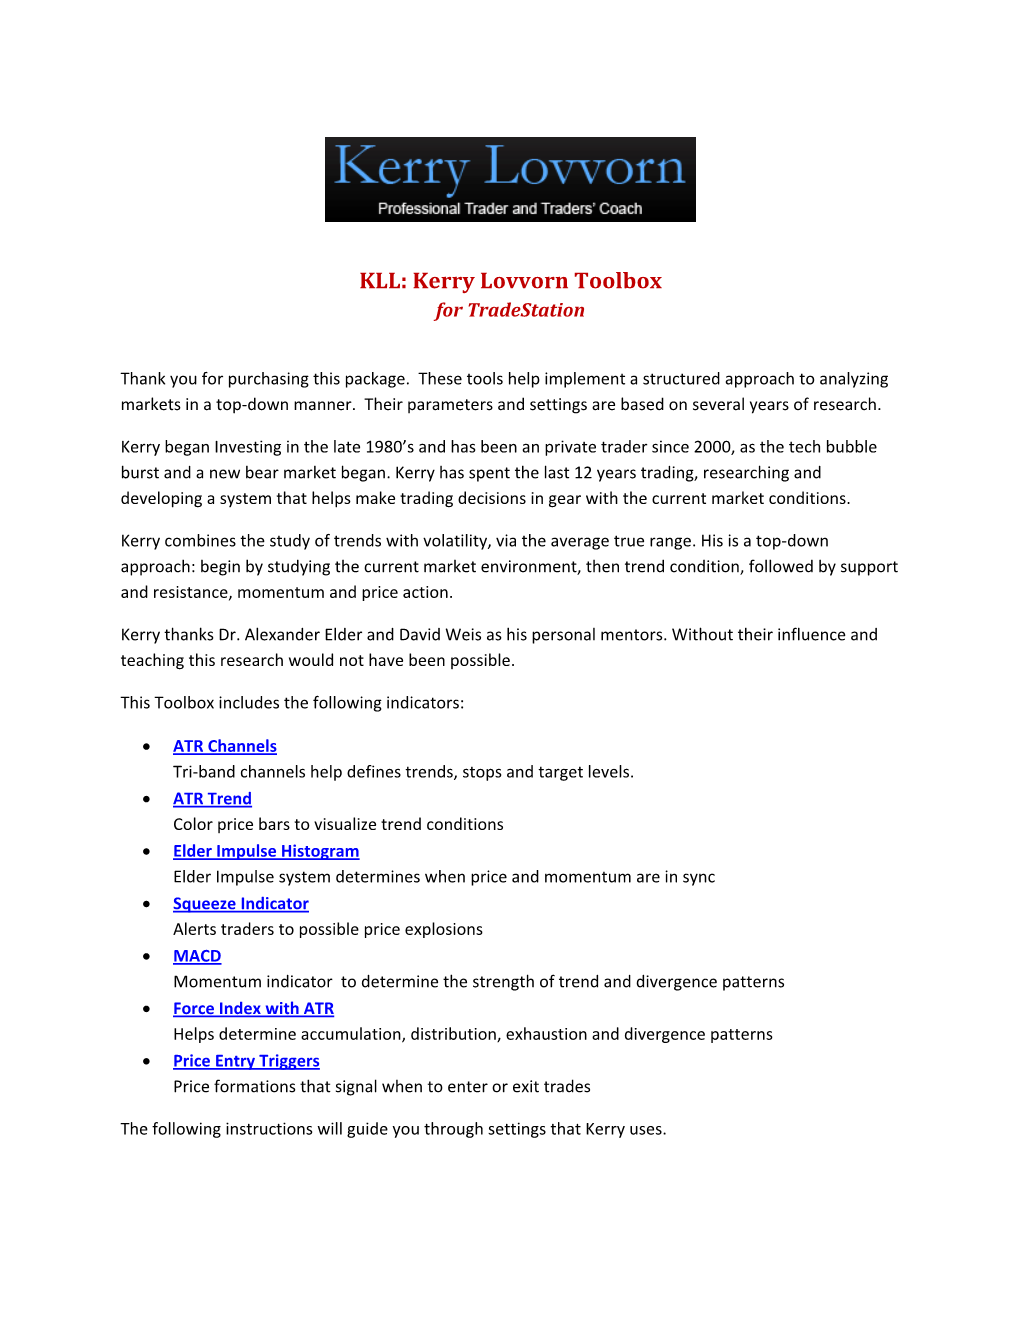 KLL: Kerry Lovvorn Toolbox for Tradestation